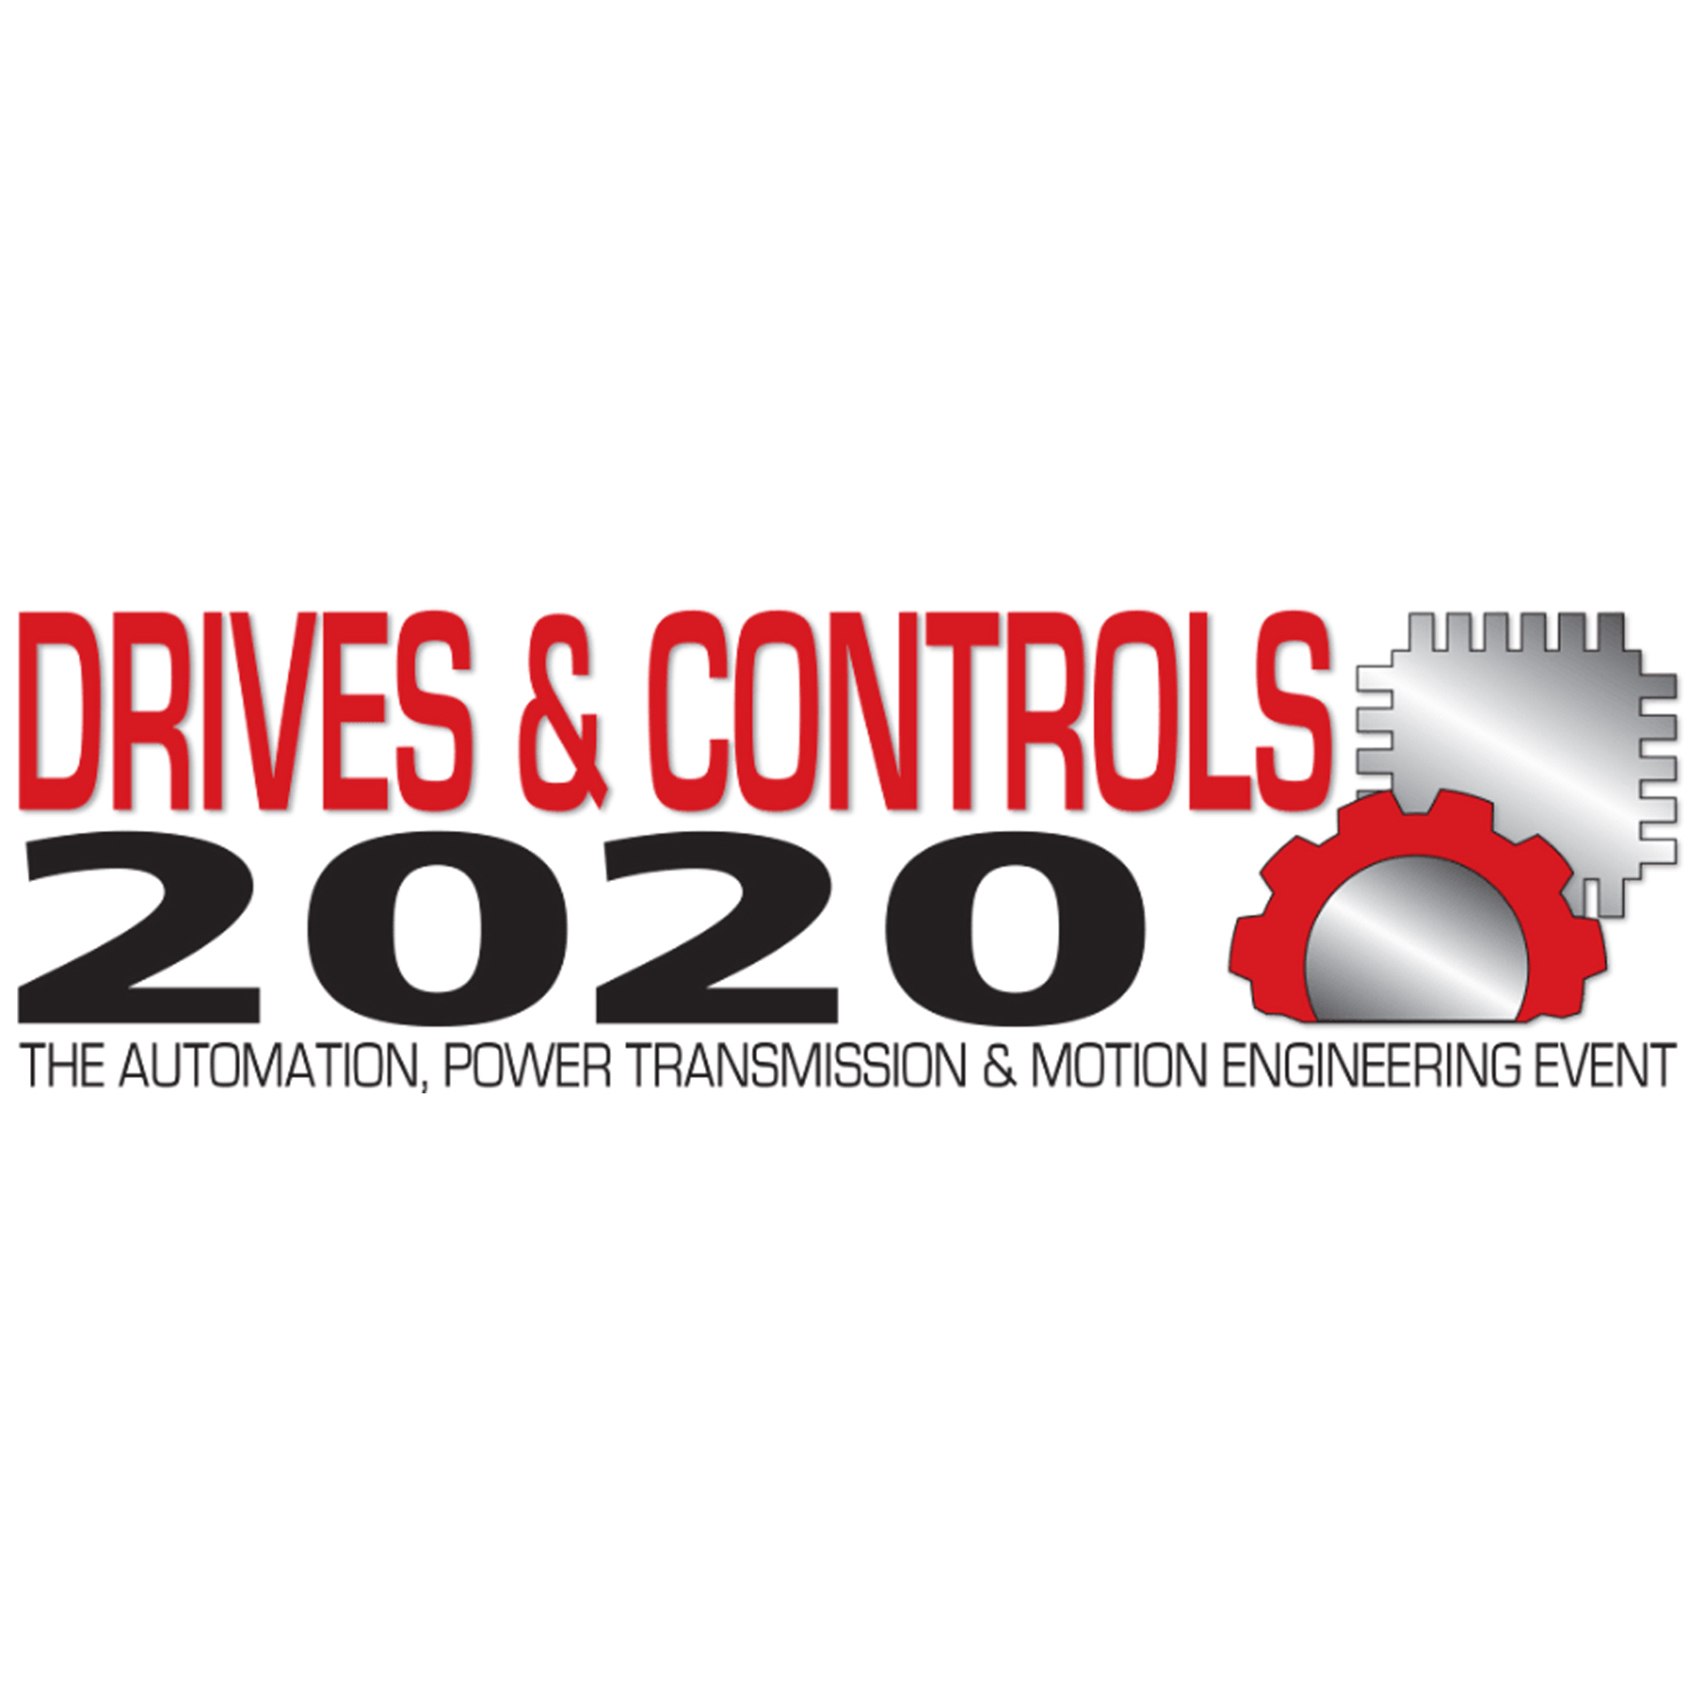 CamdenBoss exhibits at Drives and Controls 2020 show